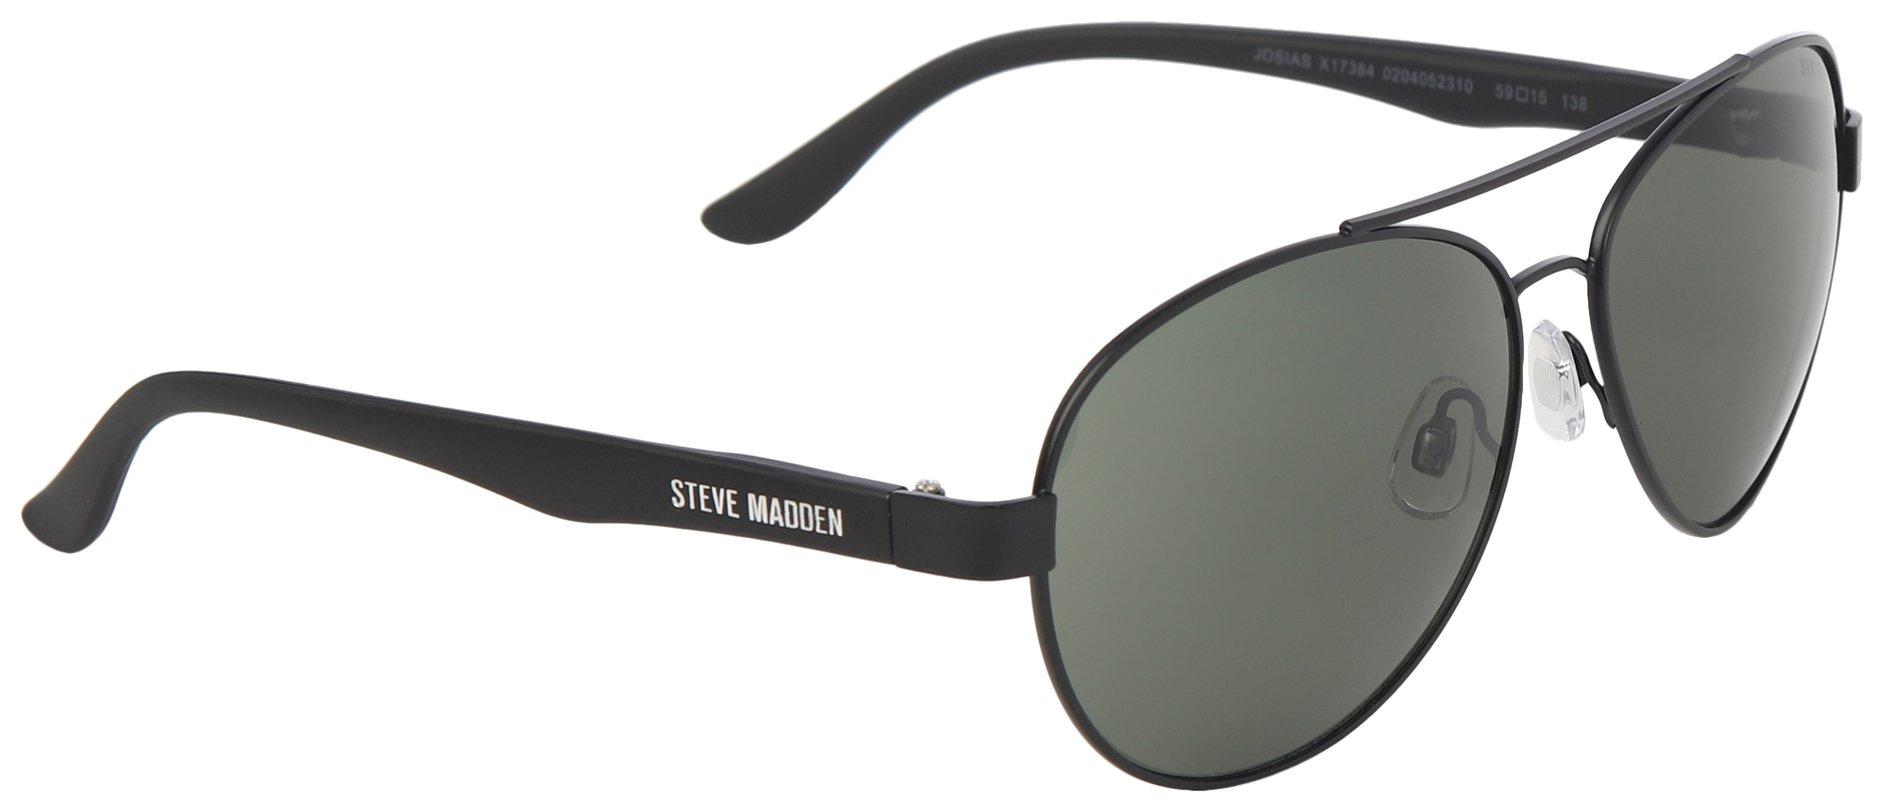 Steve Madden Mens Solid Aviator Sunglasses